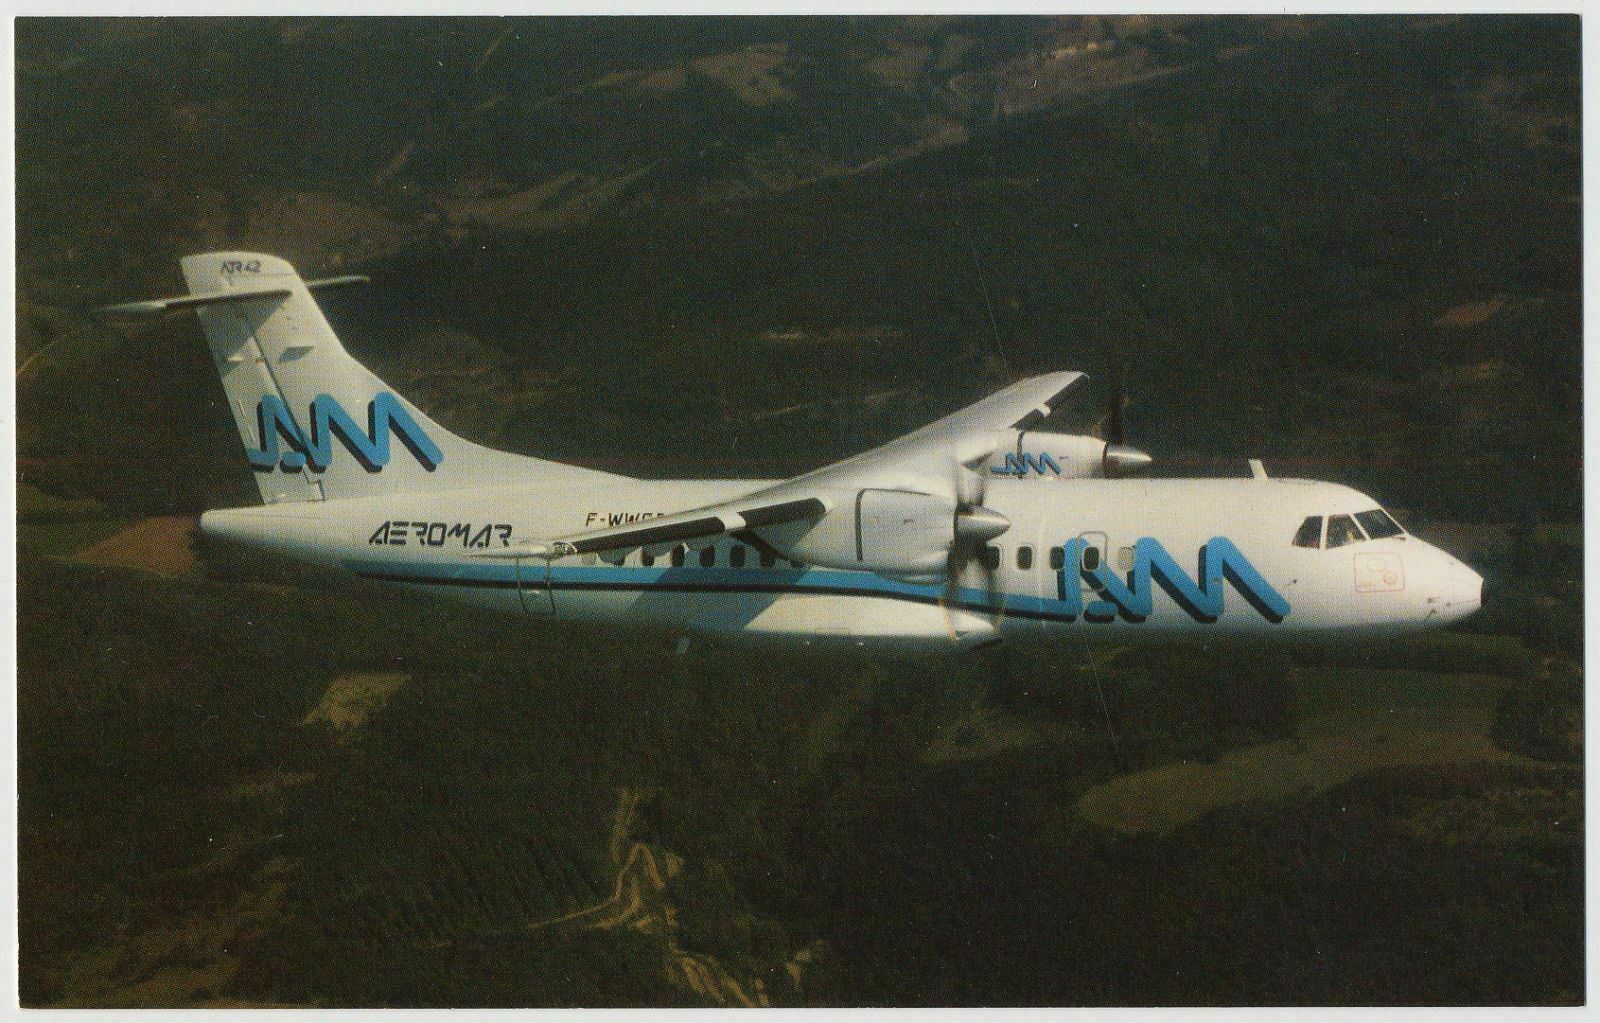 Transportes Aeromar - Aerospatiale/Aeritalia ATR 42-300 